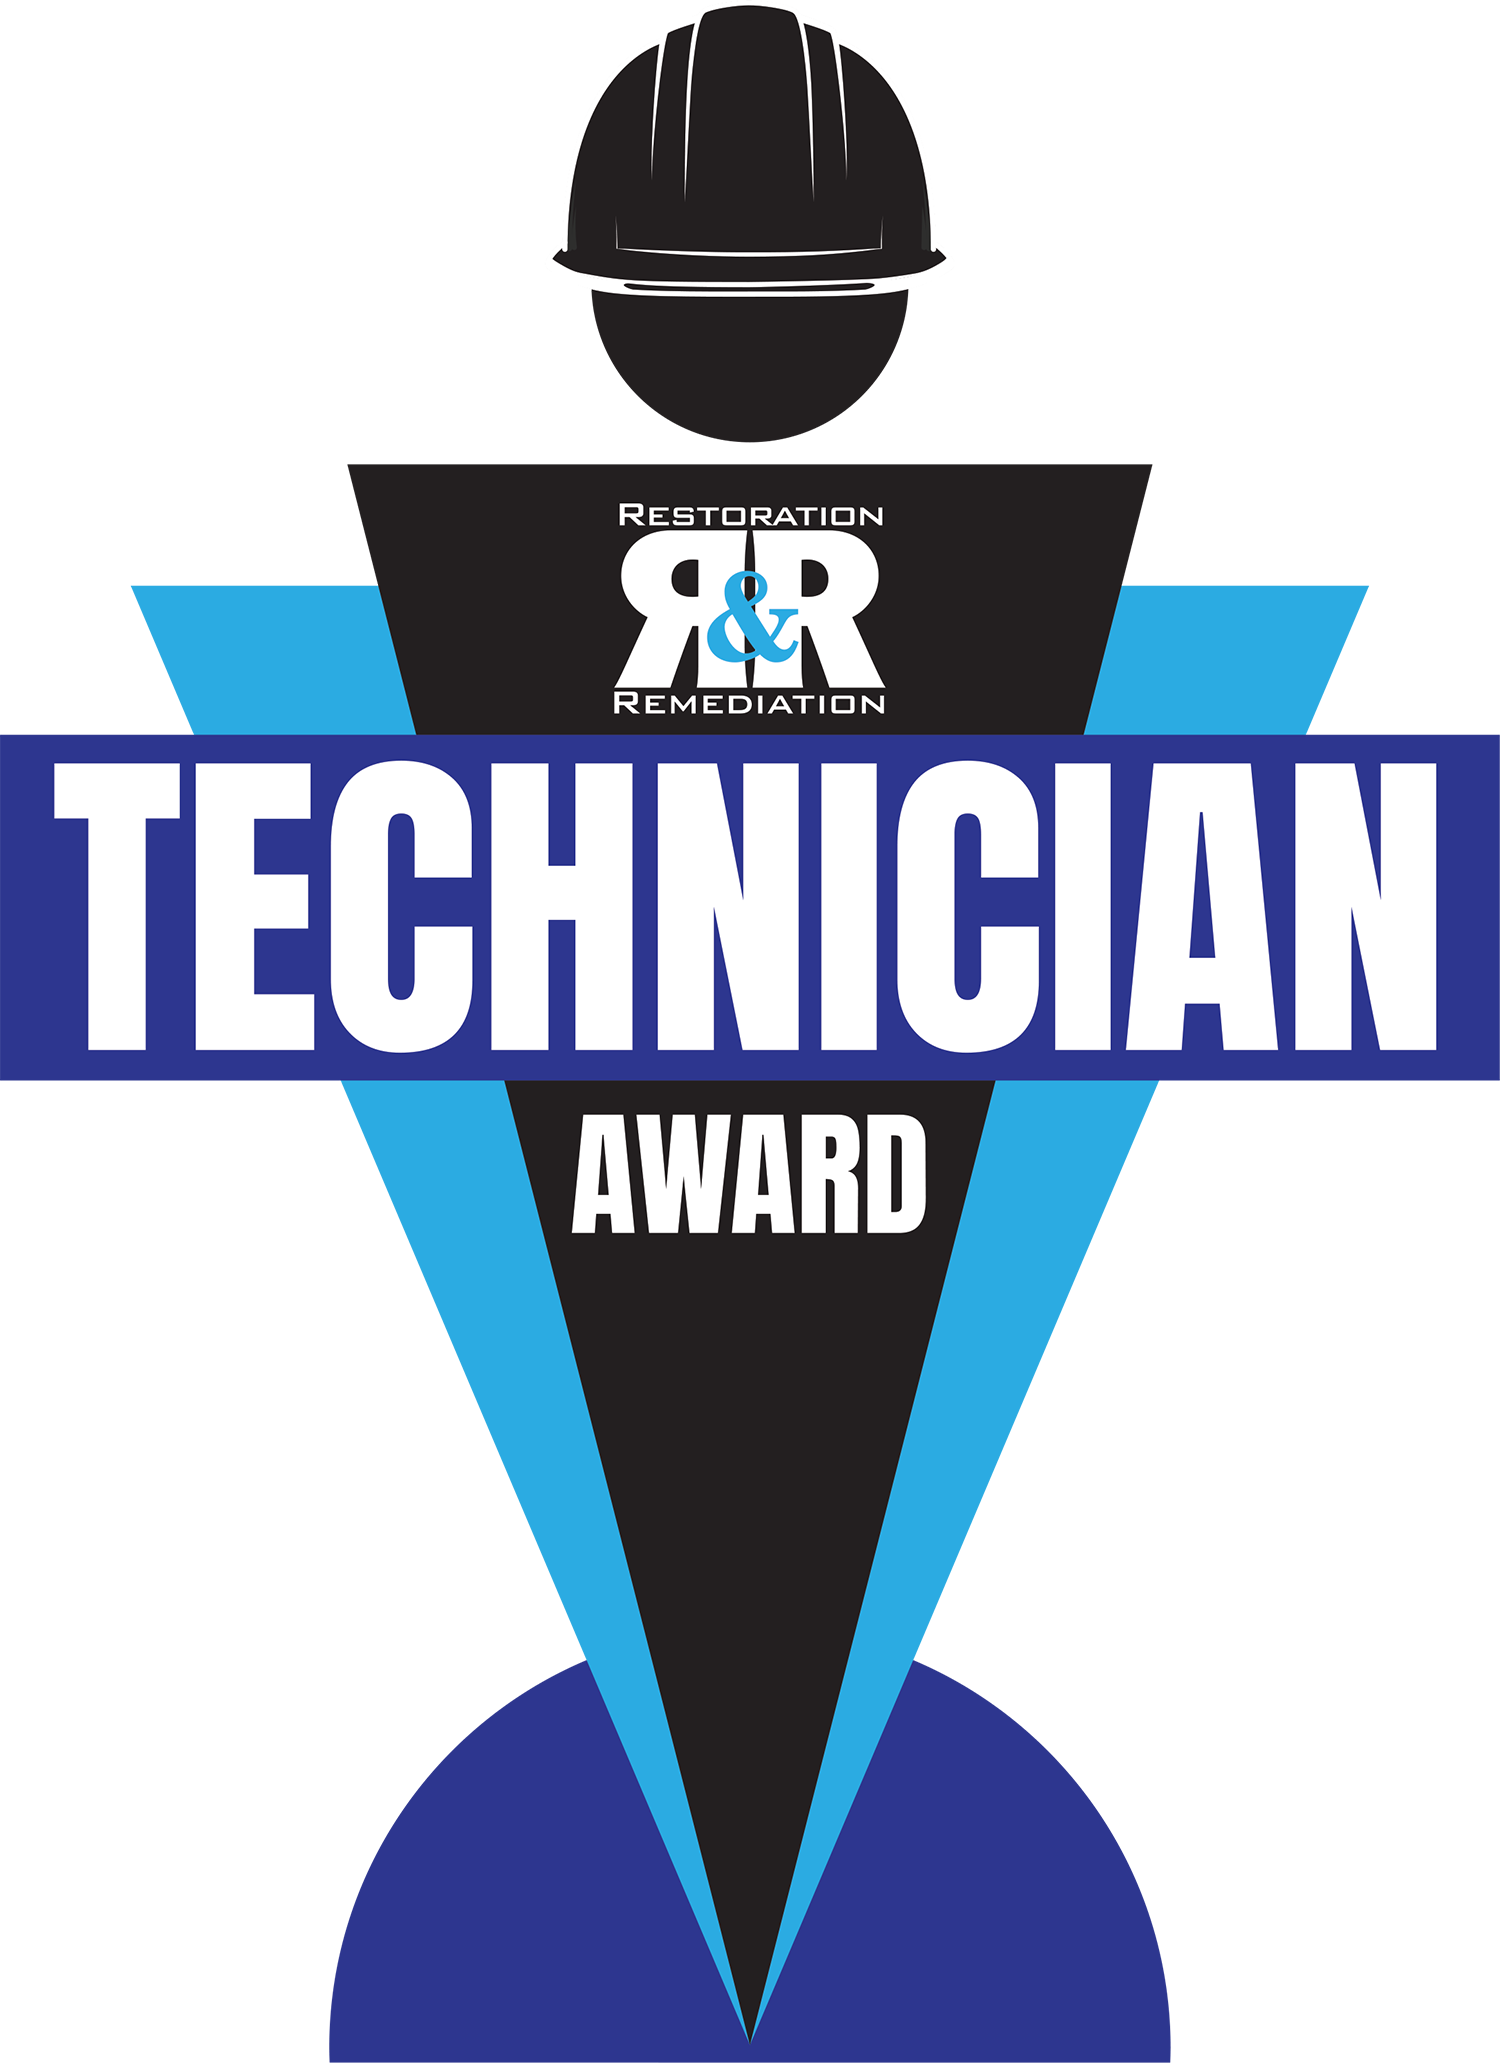 R&R Technician Award logo